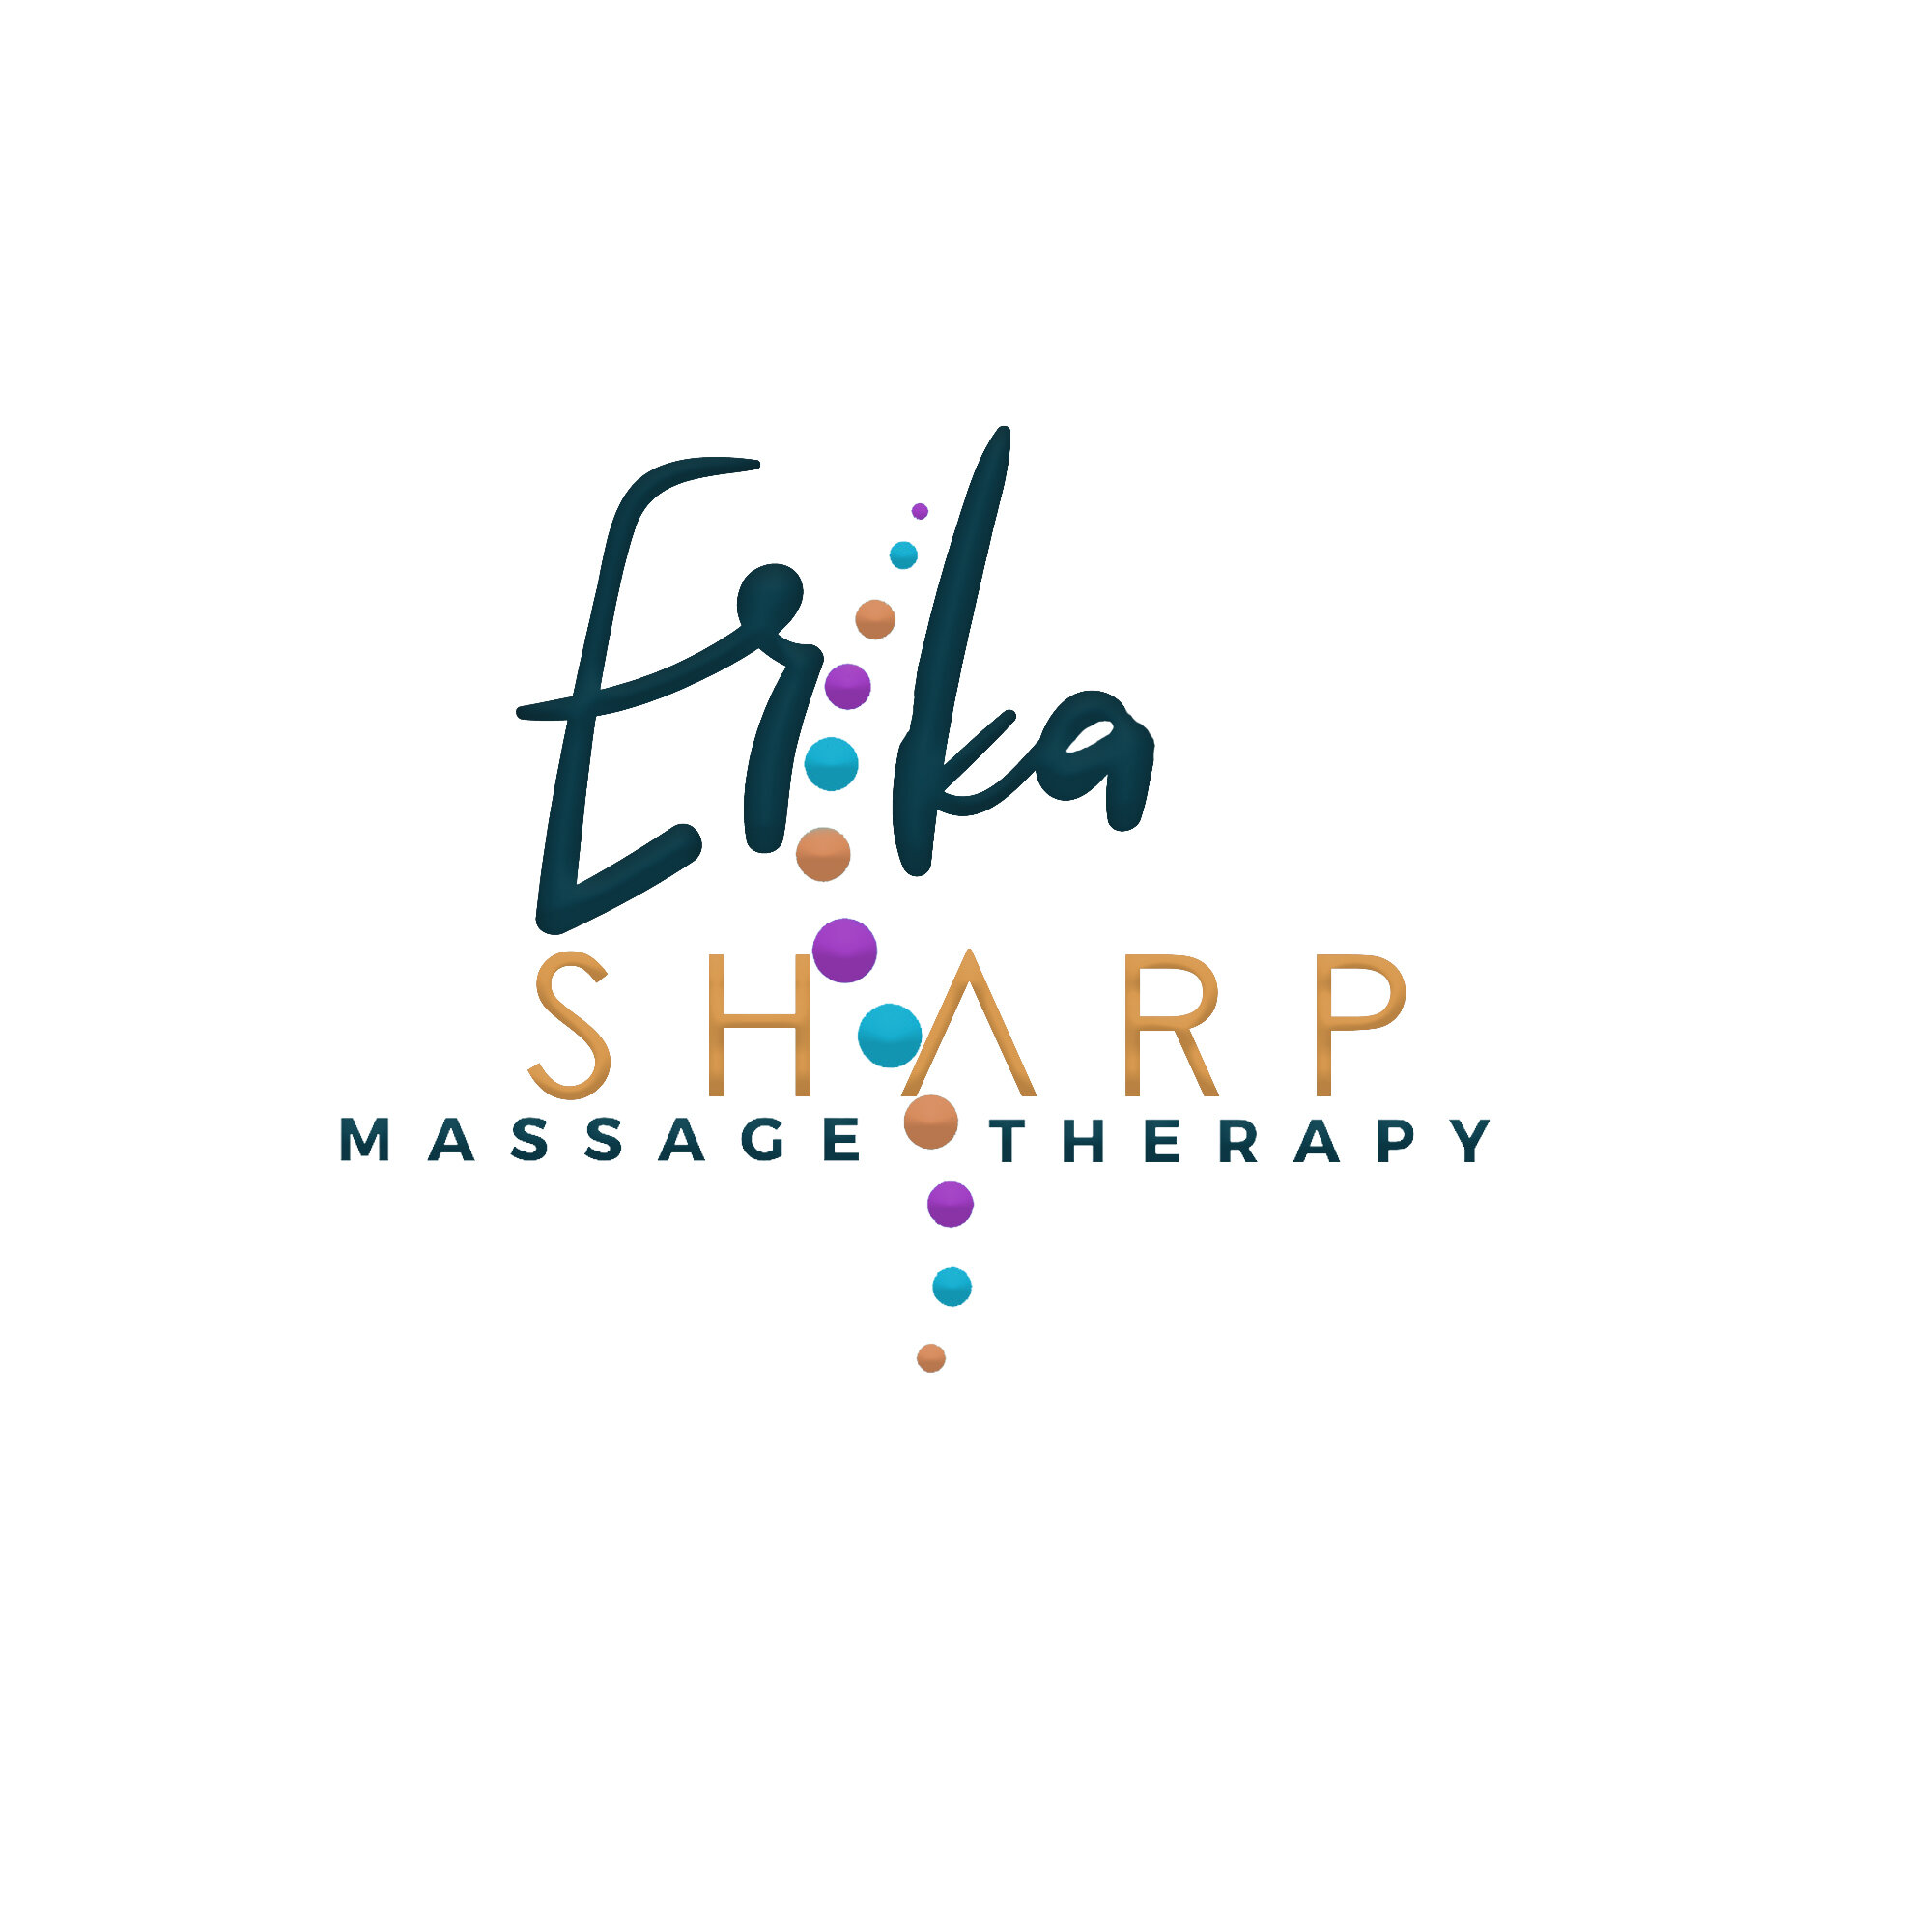 Feel Sharp Massage Therapy